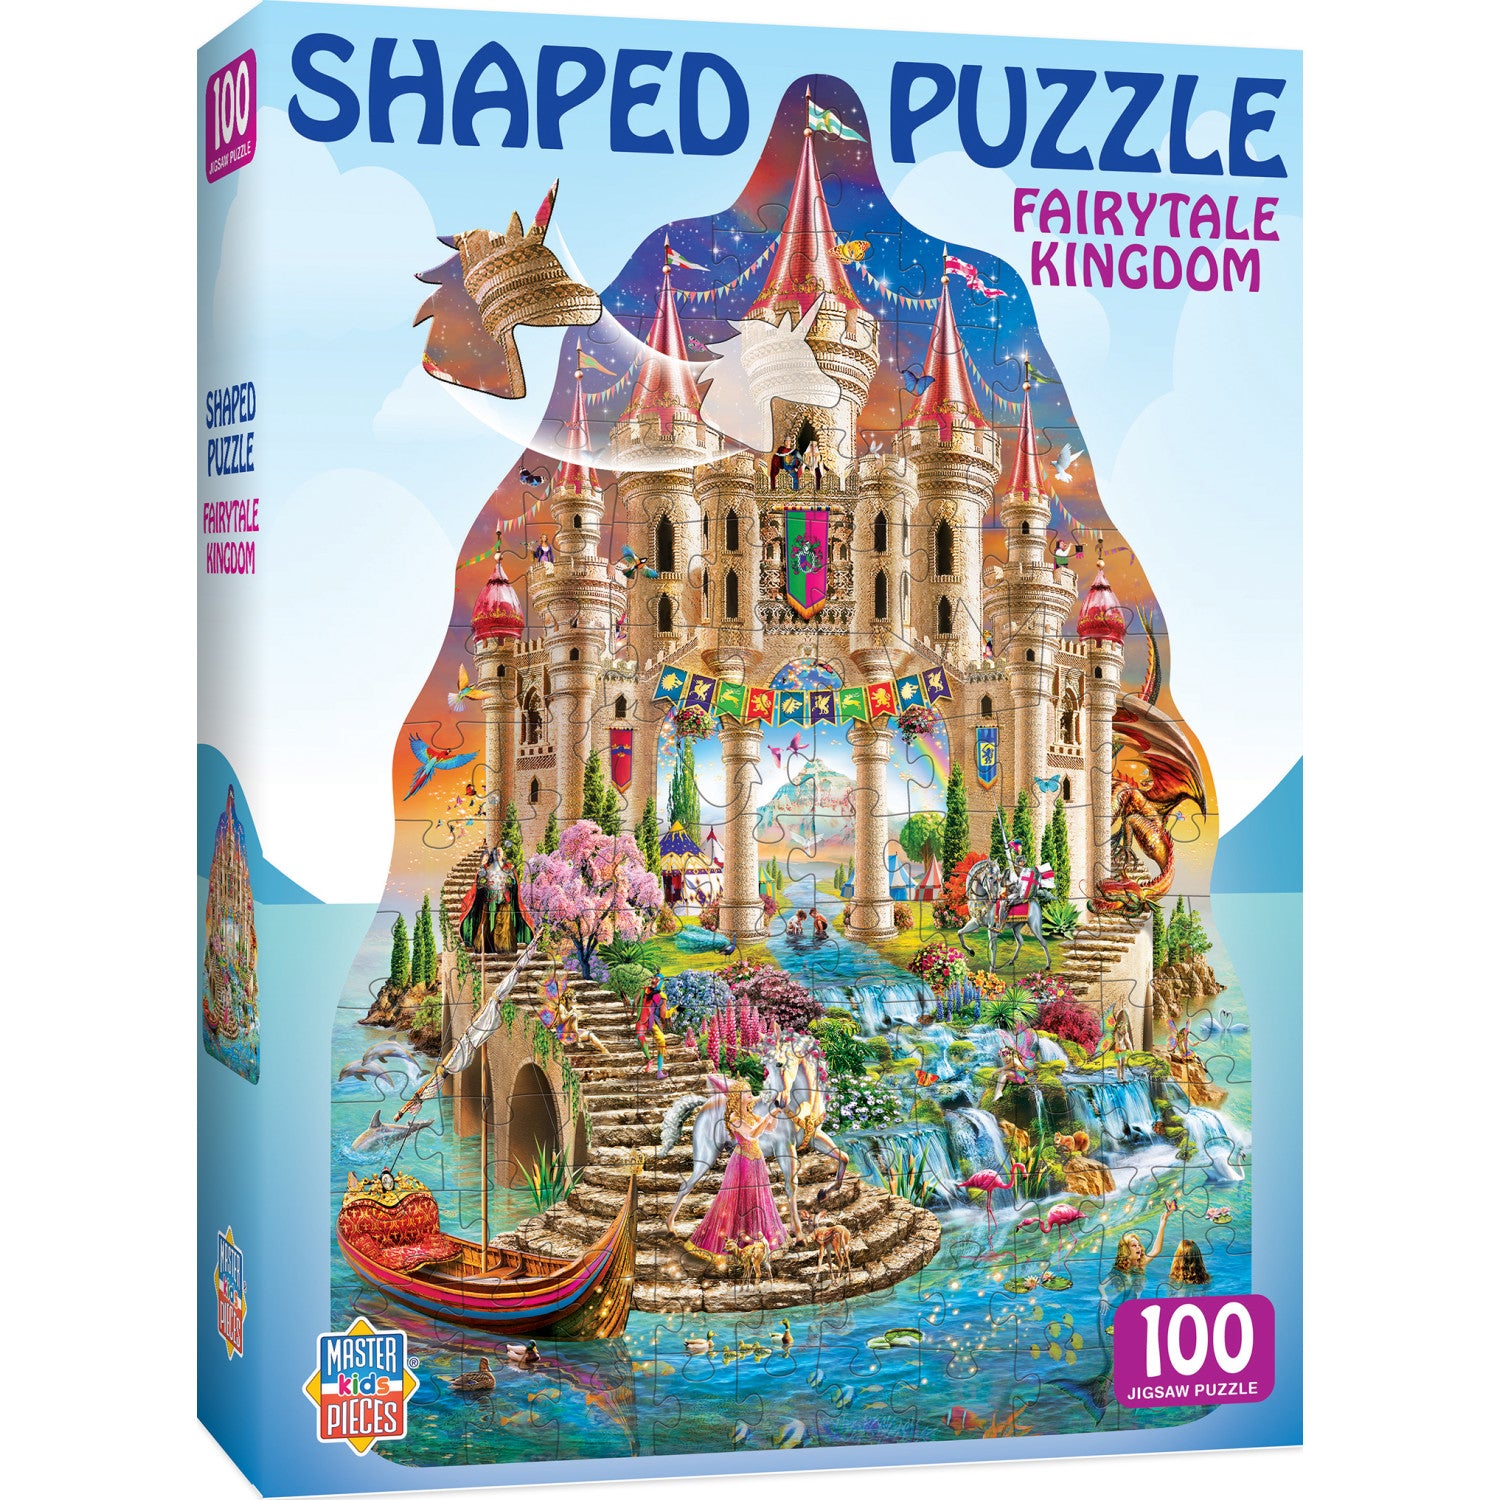 Fairytale Kingdom - 100 Piece Shaped Jigsaw Puzzle